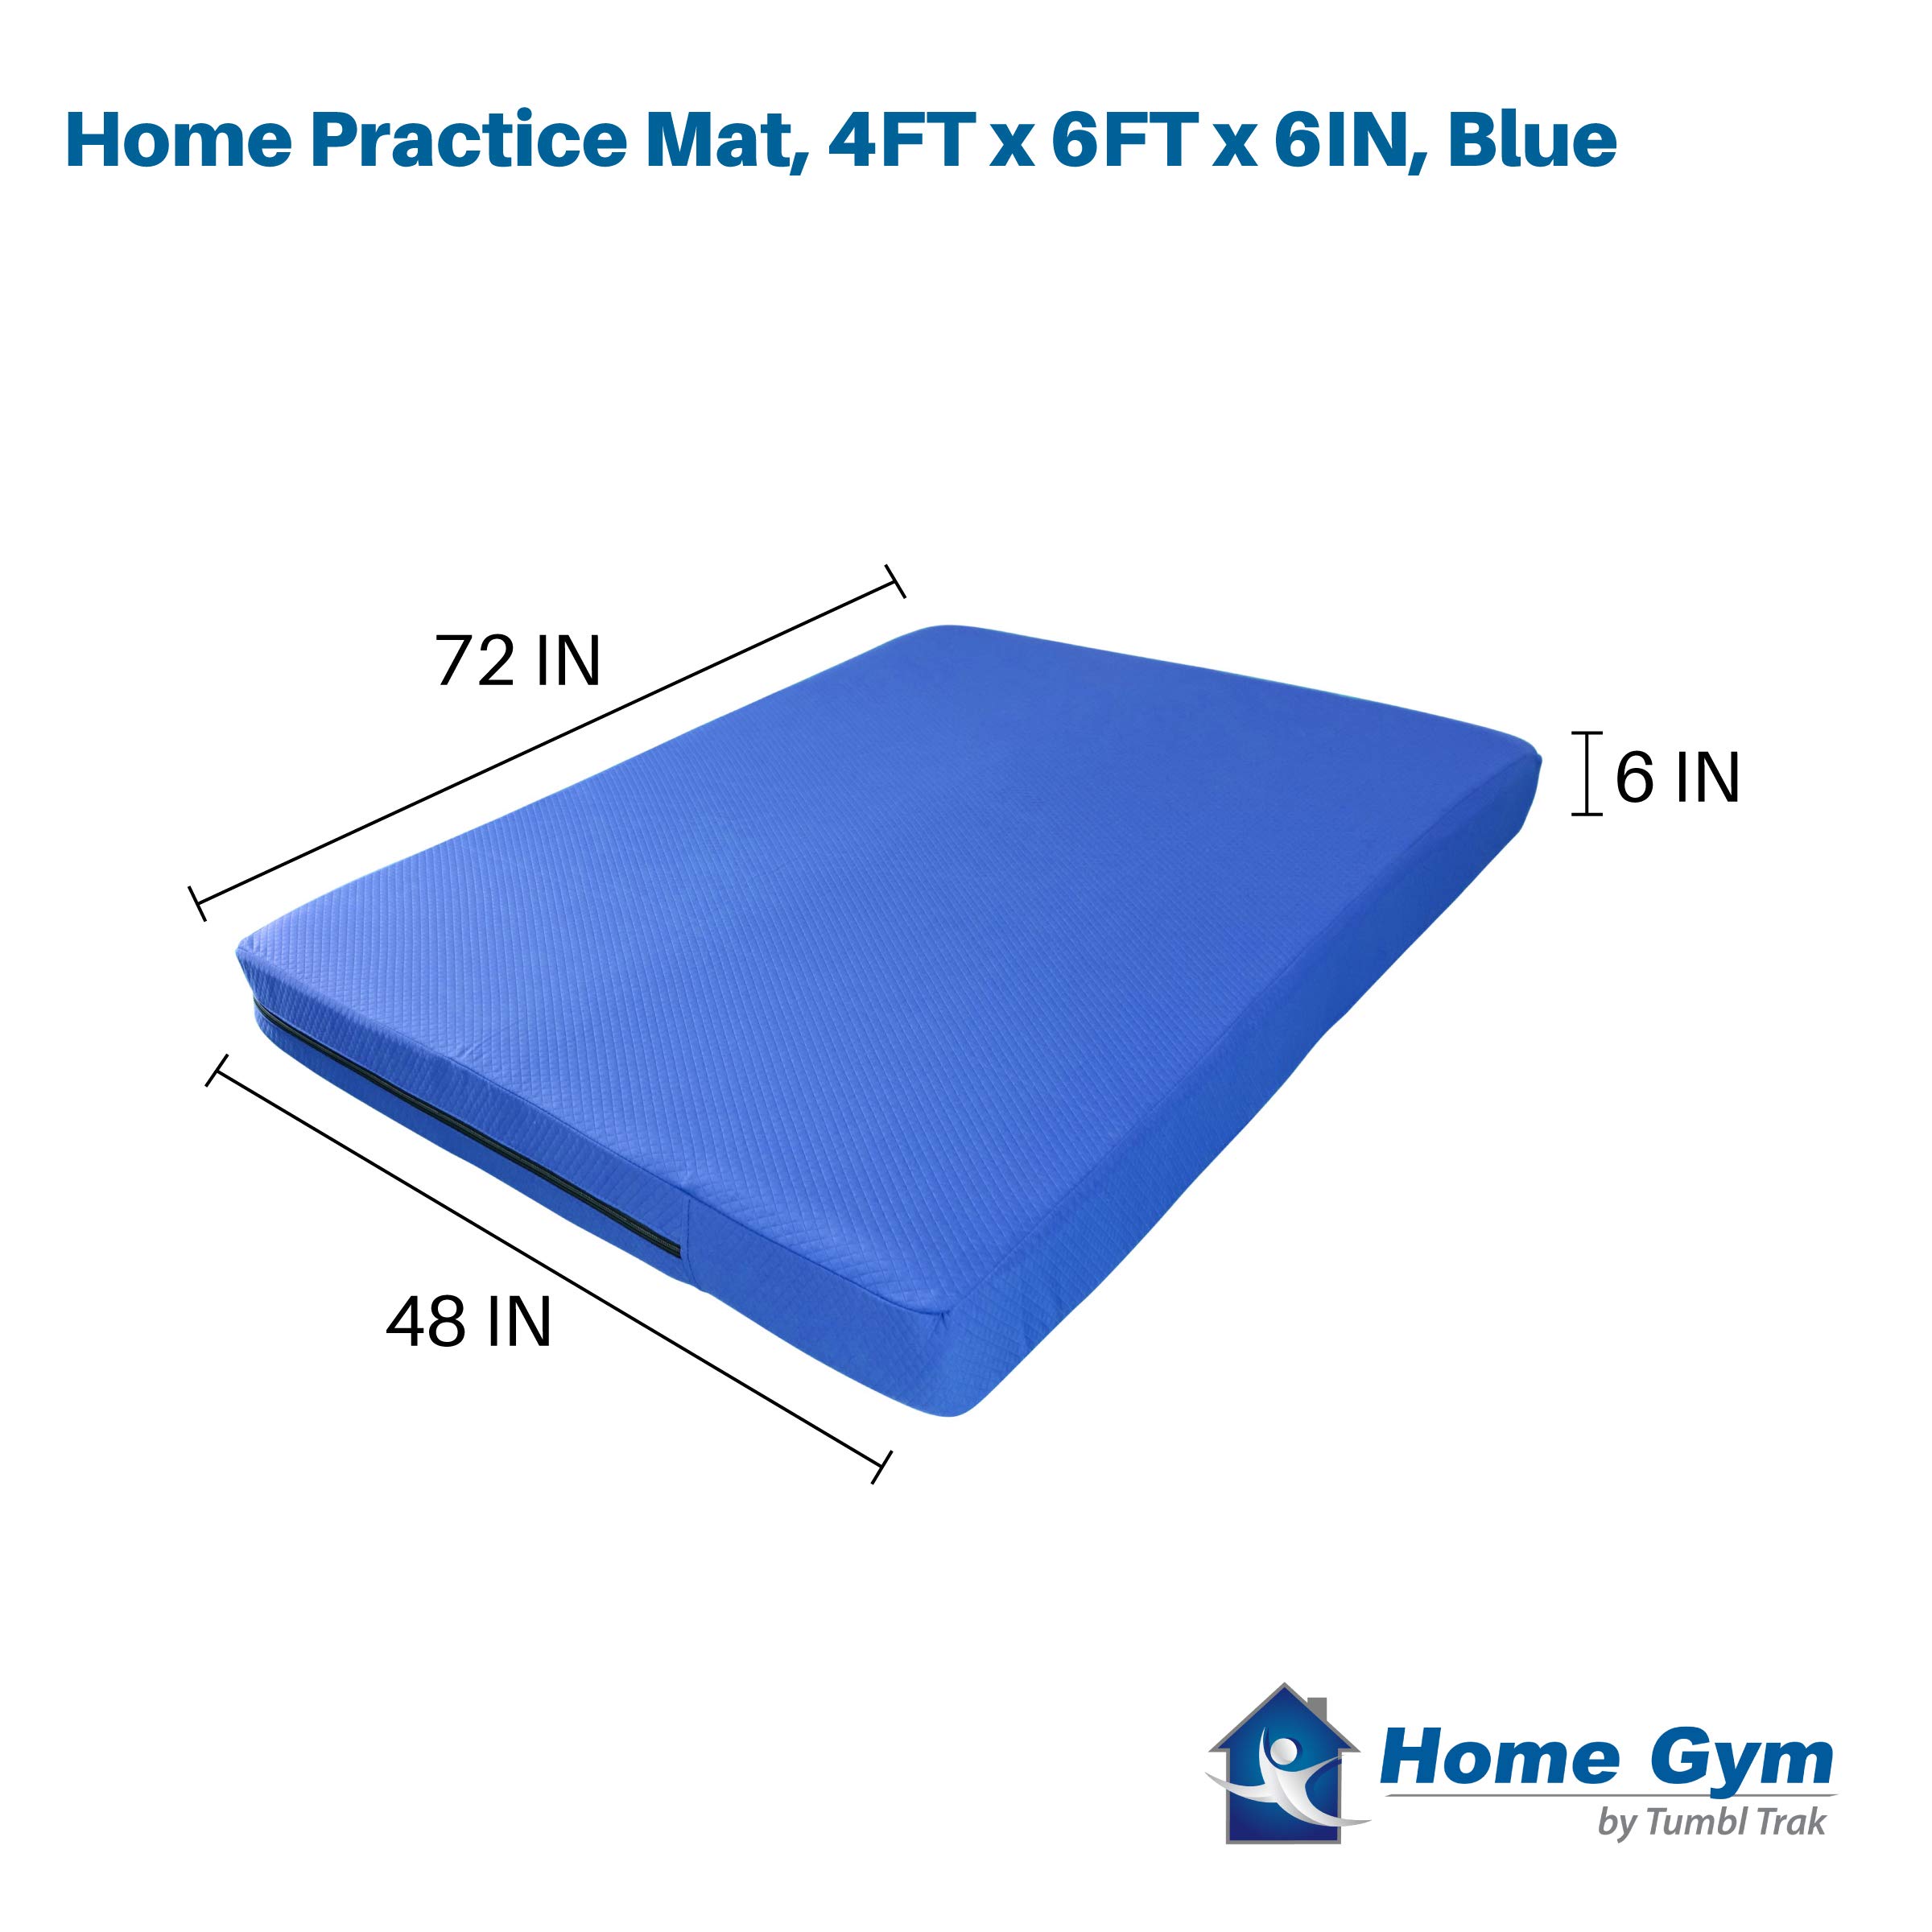 Tumbl Trak Home Practice Mat (Blue), 4ft x 6ft x 6in, HPM-466blue